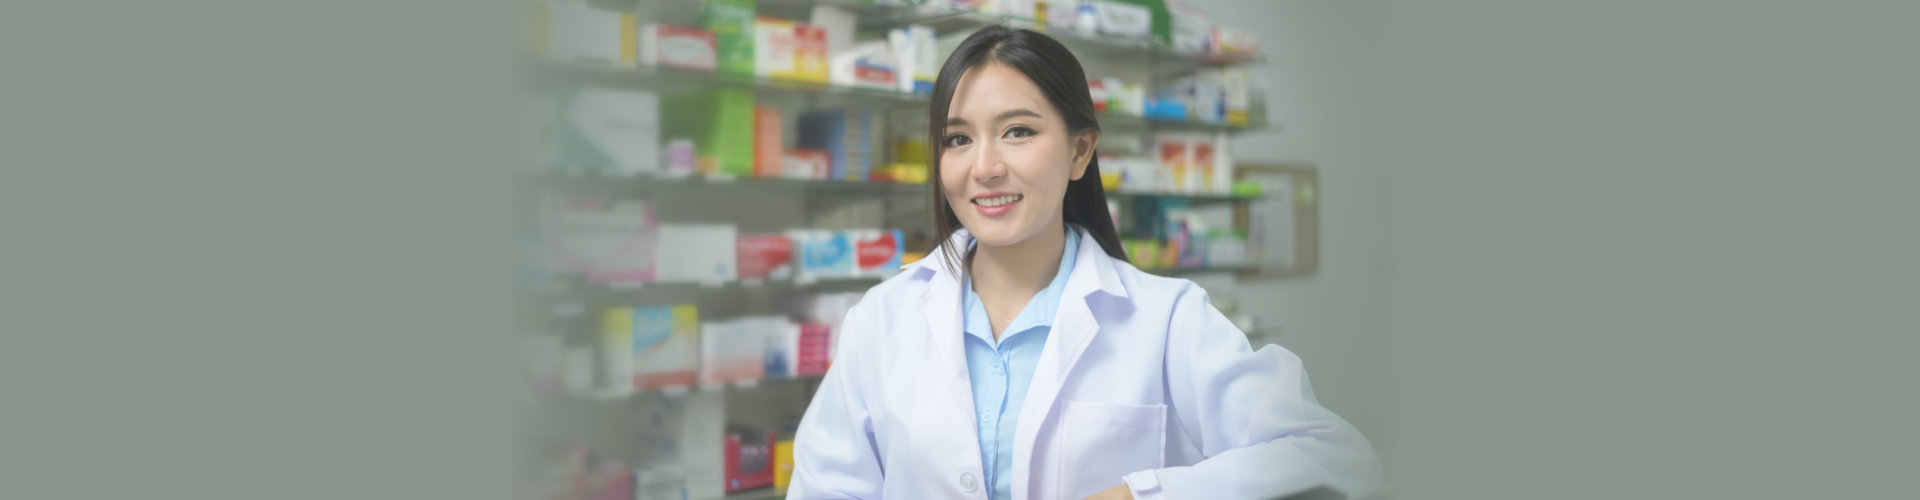 asian woman pharmacist wearing lab coat